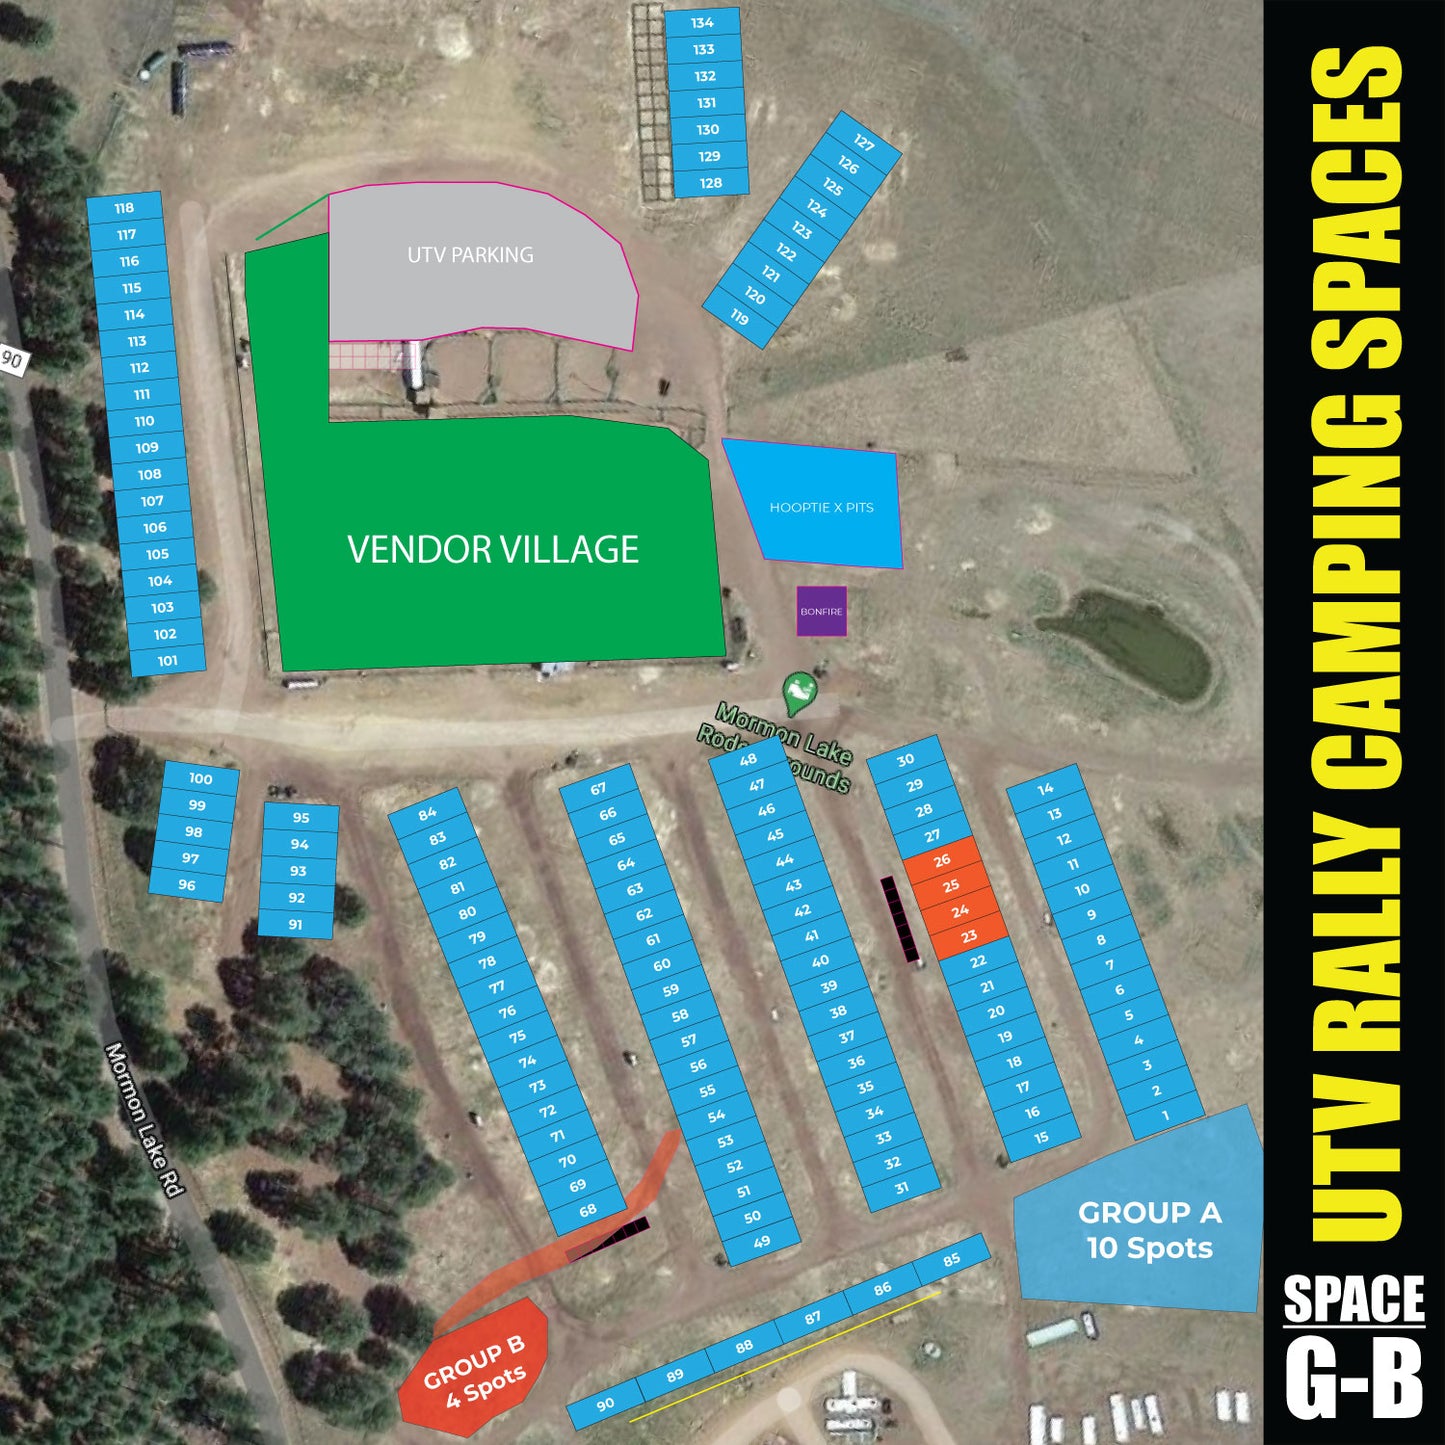 UTV Rally Mormon Lake: Camping - Group Spaces